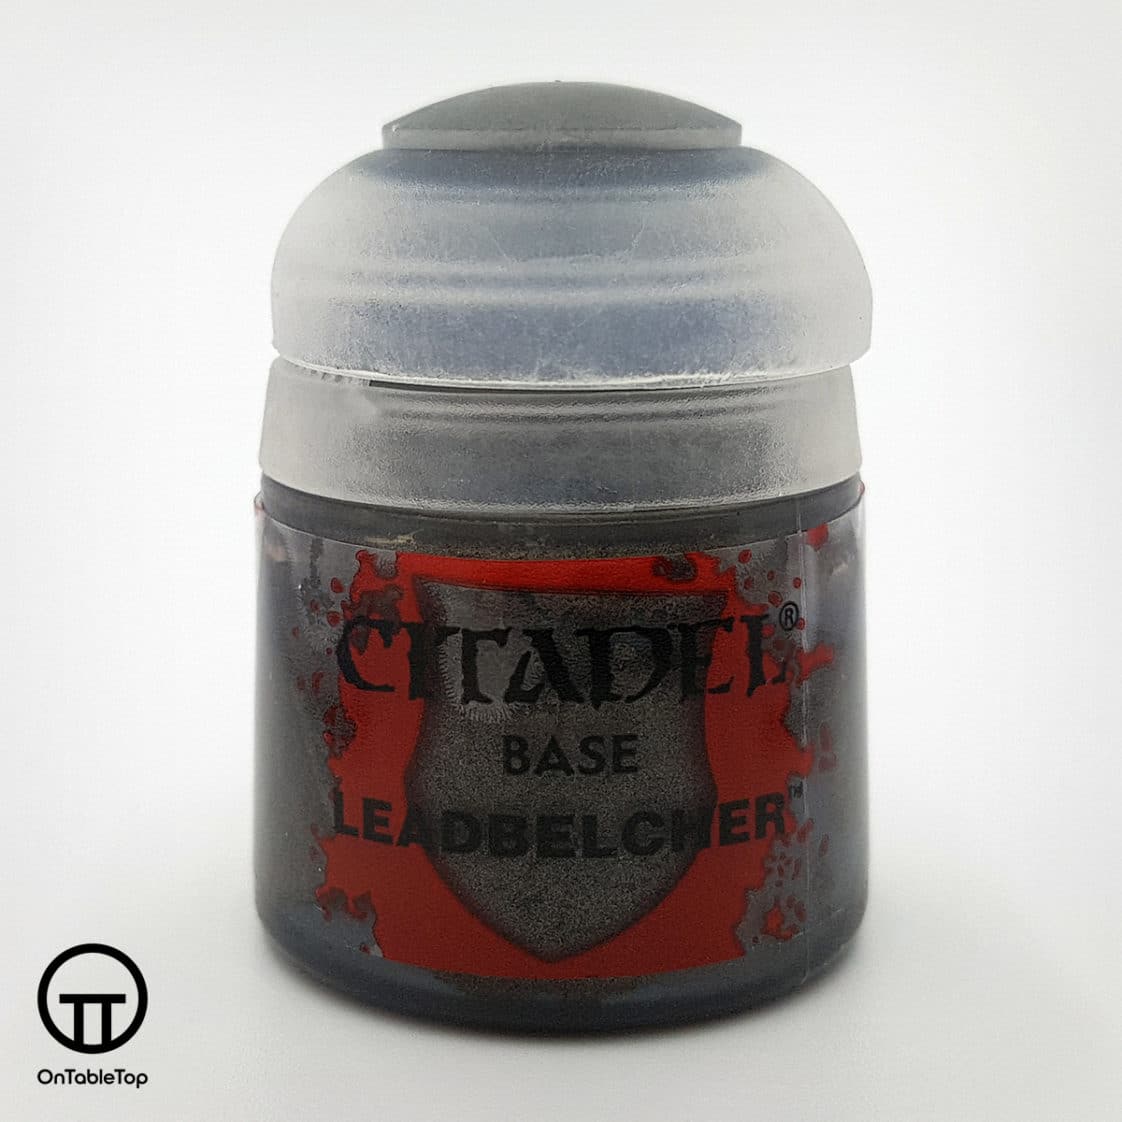 Citadel Paint - Base: Leadbelcher 12ml